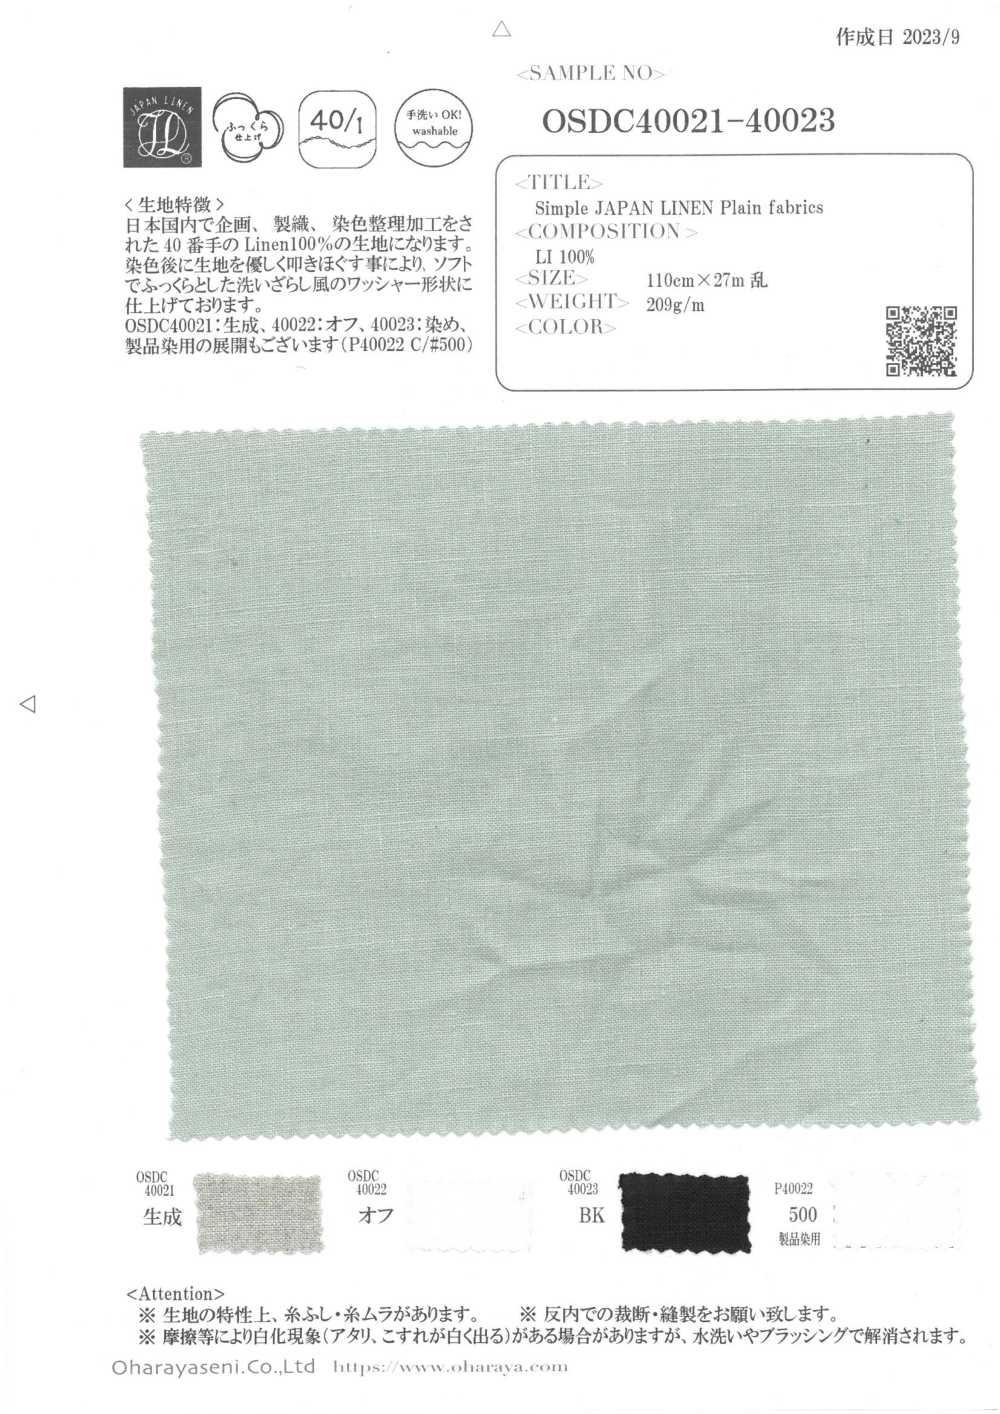 OSDC40023 Einfache JAPAN LEINEN Unistoffe (Farbe)[Textilgewebe] Oharayaseni